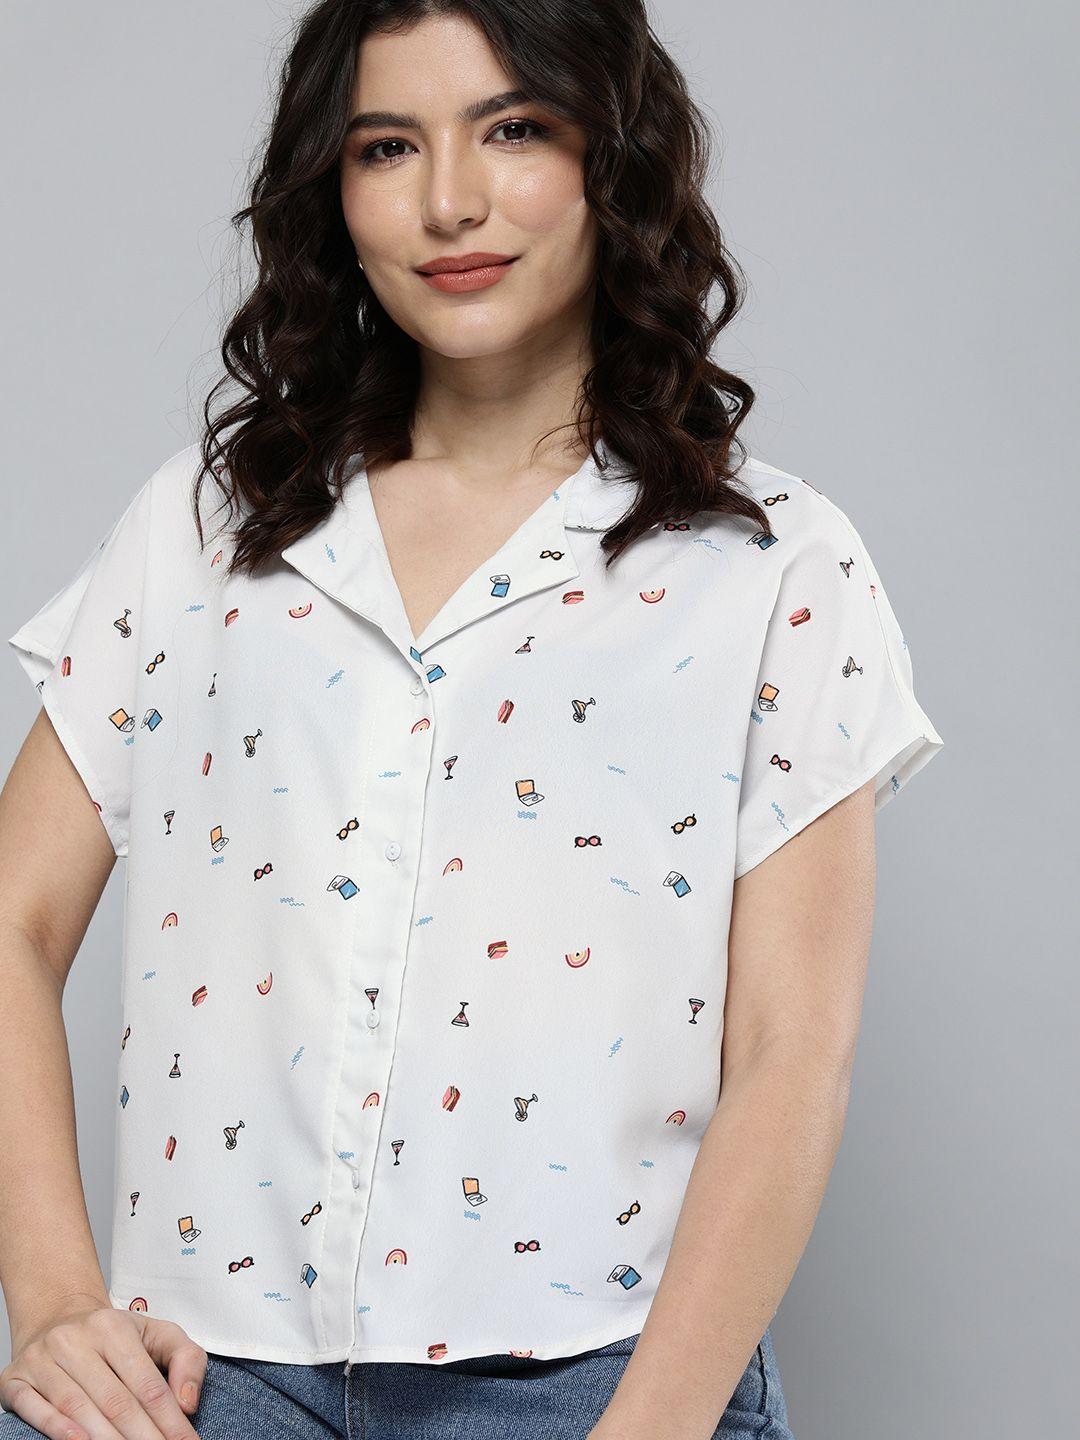 mast-&-harbour-women's-white-geometrical-printed-short-sleeved-shirt